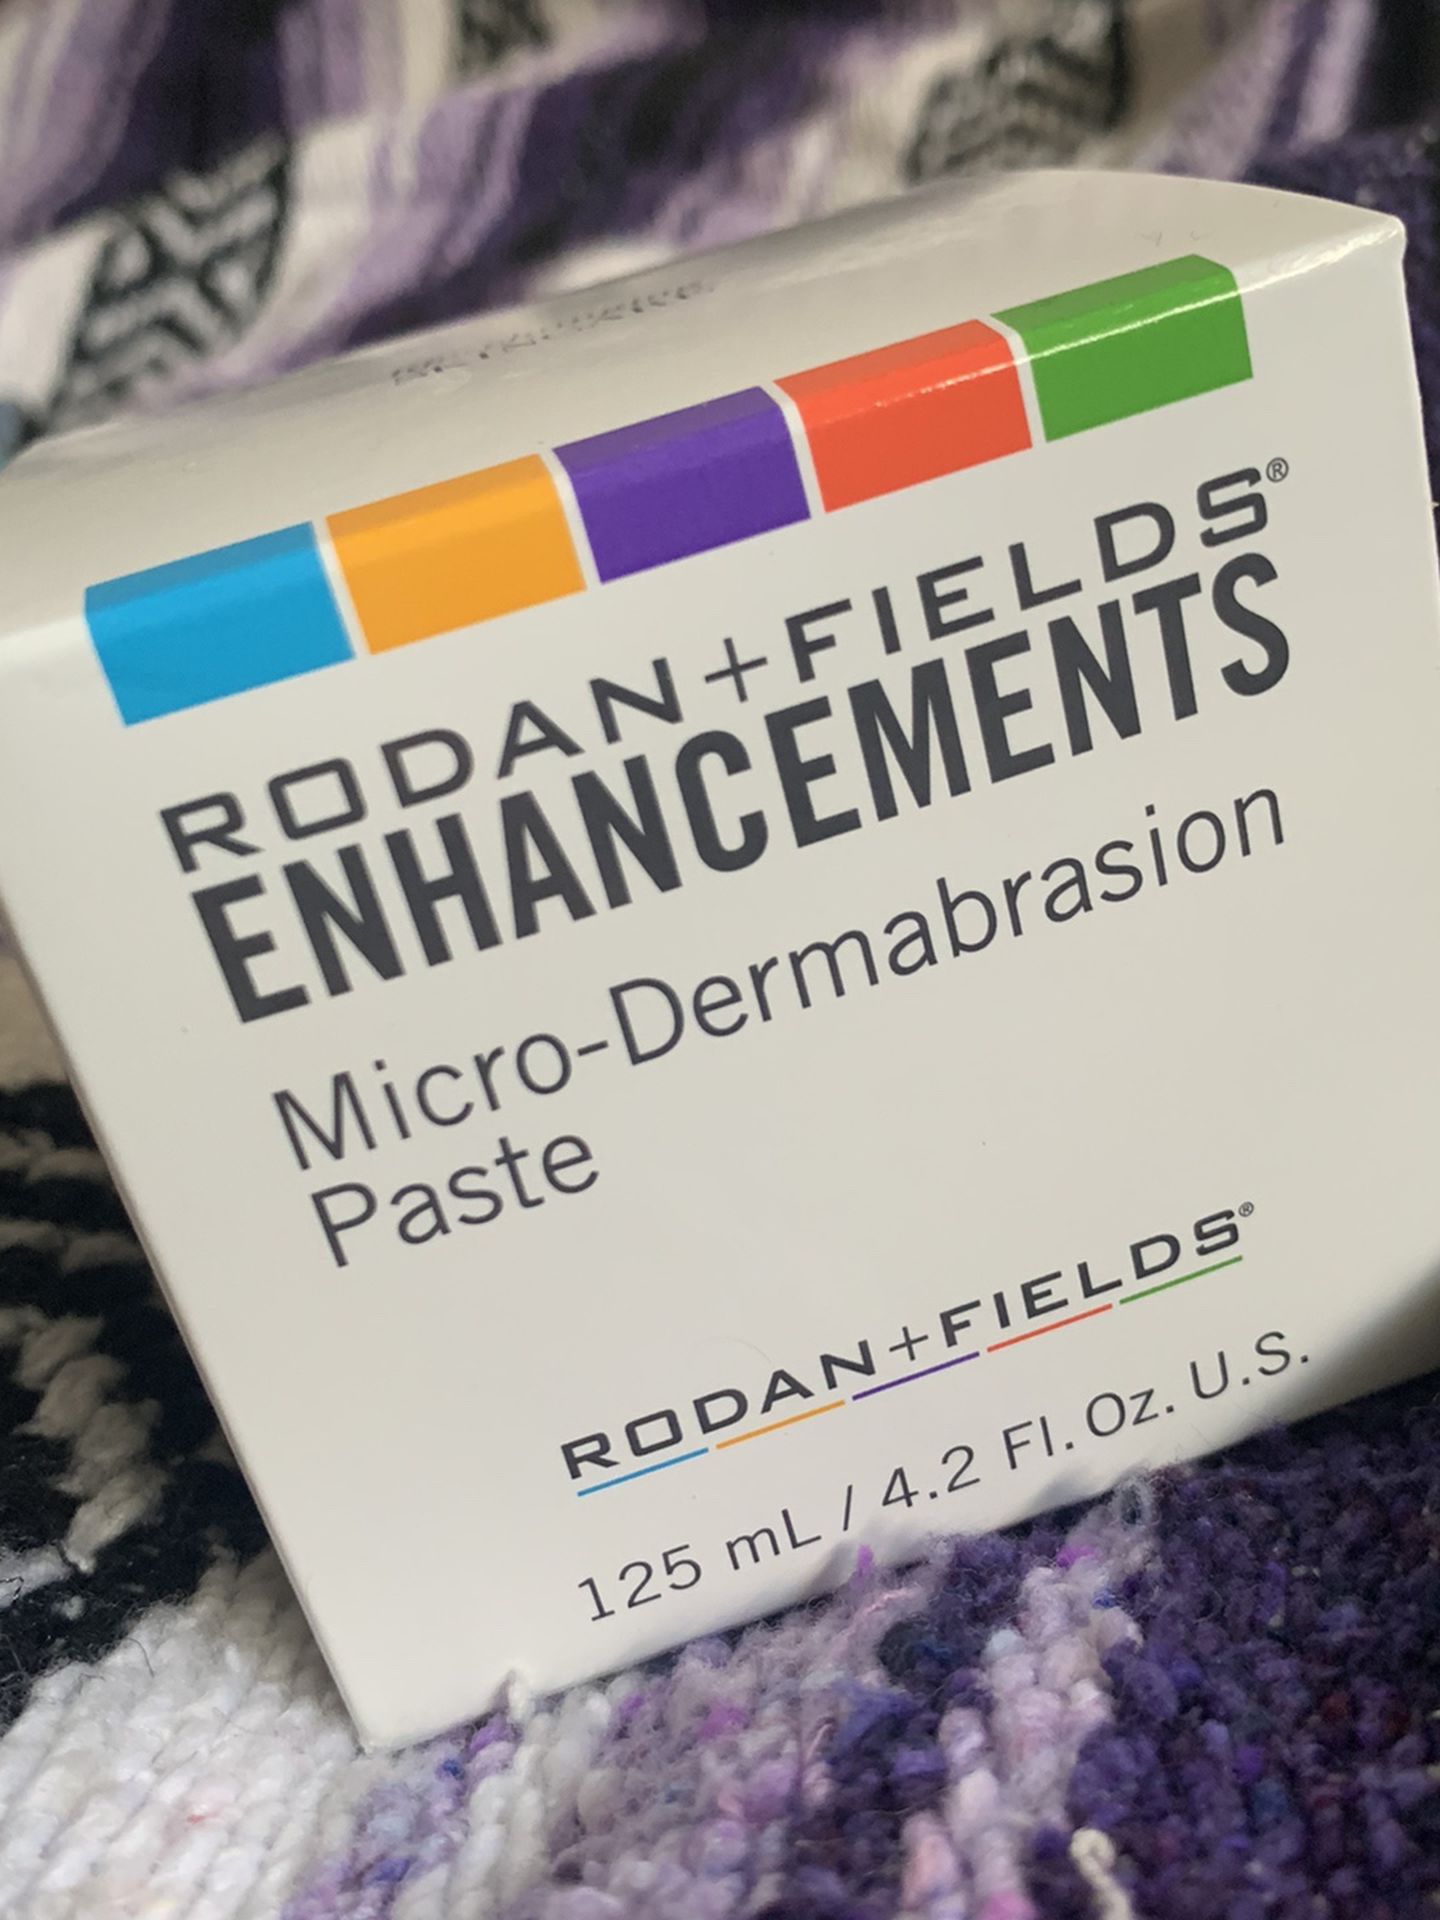 Rodan and Fields Micro-Dermabrasion Paste